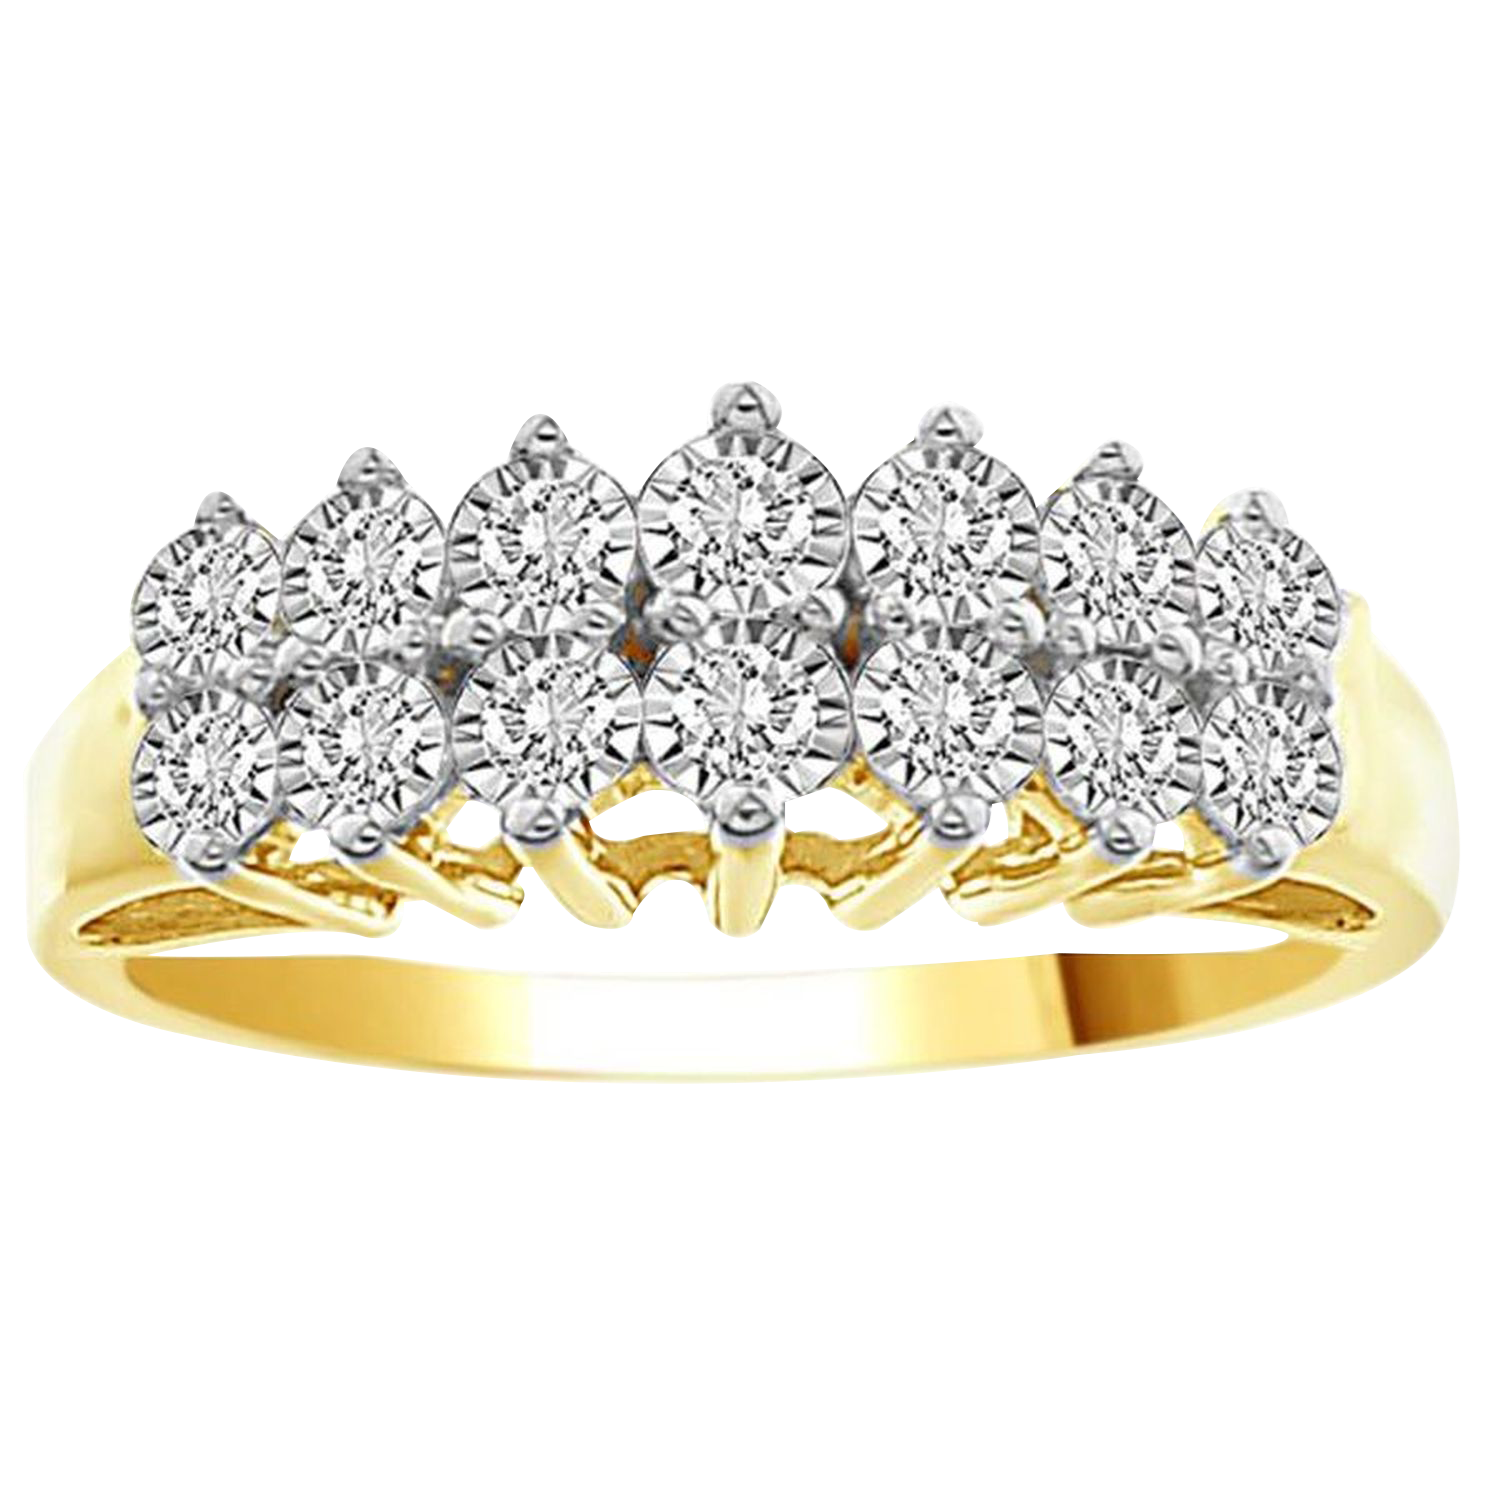 0012519_ladies-ring-14-ct-round-diamond-10k-yellow-gold.png